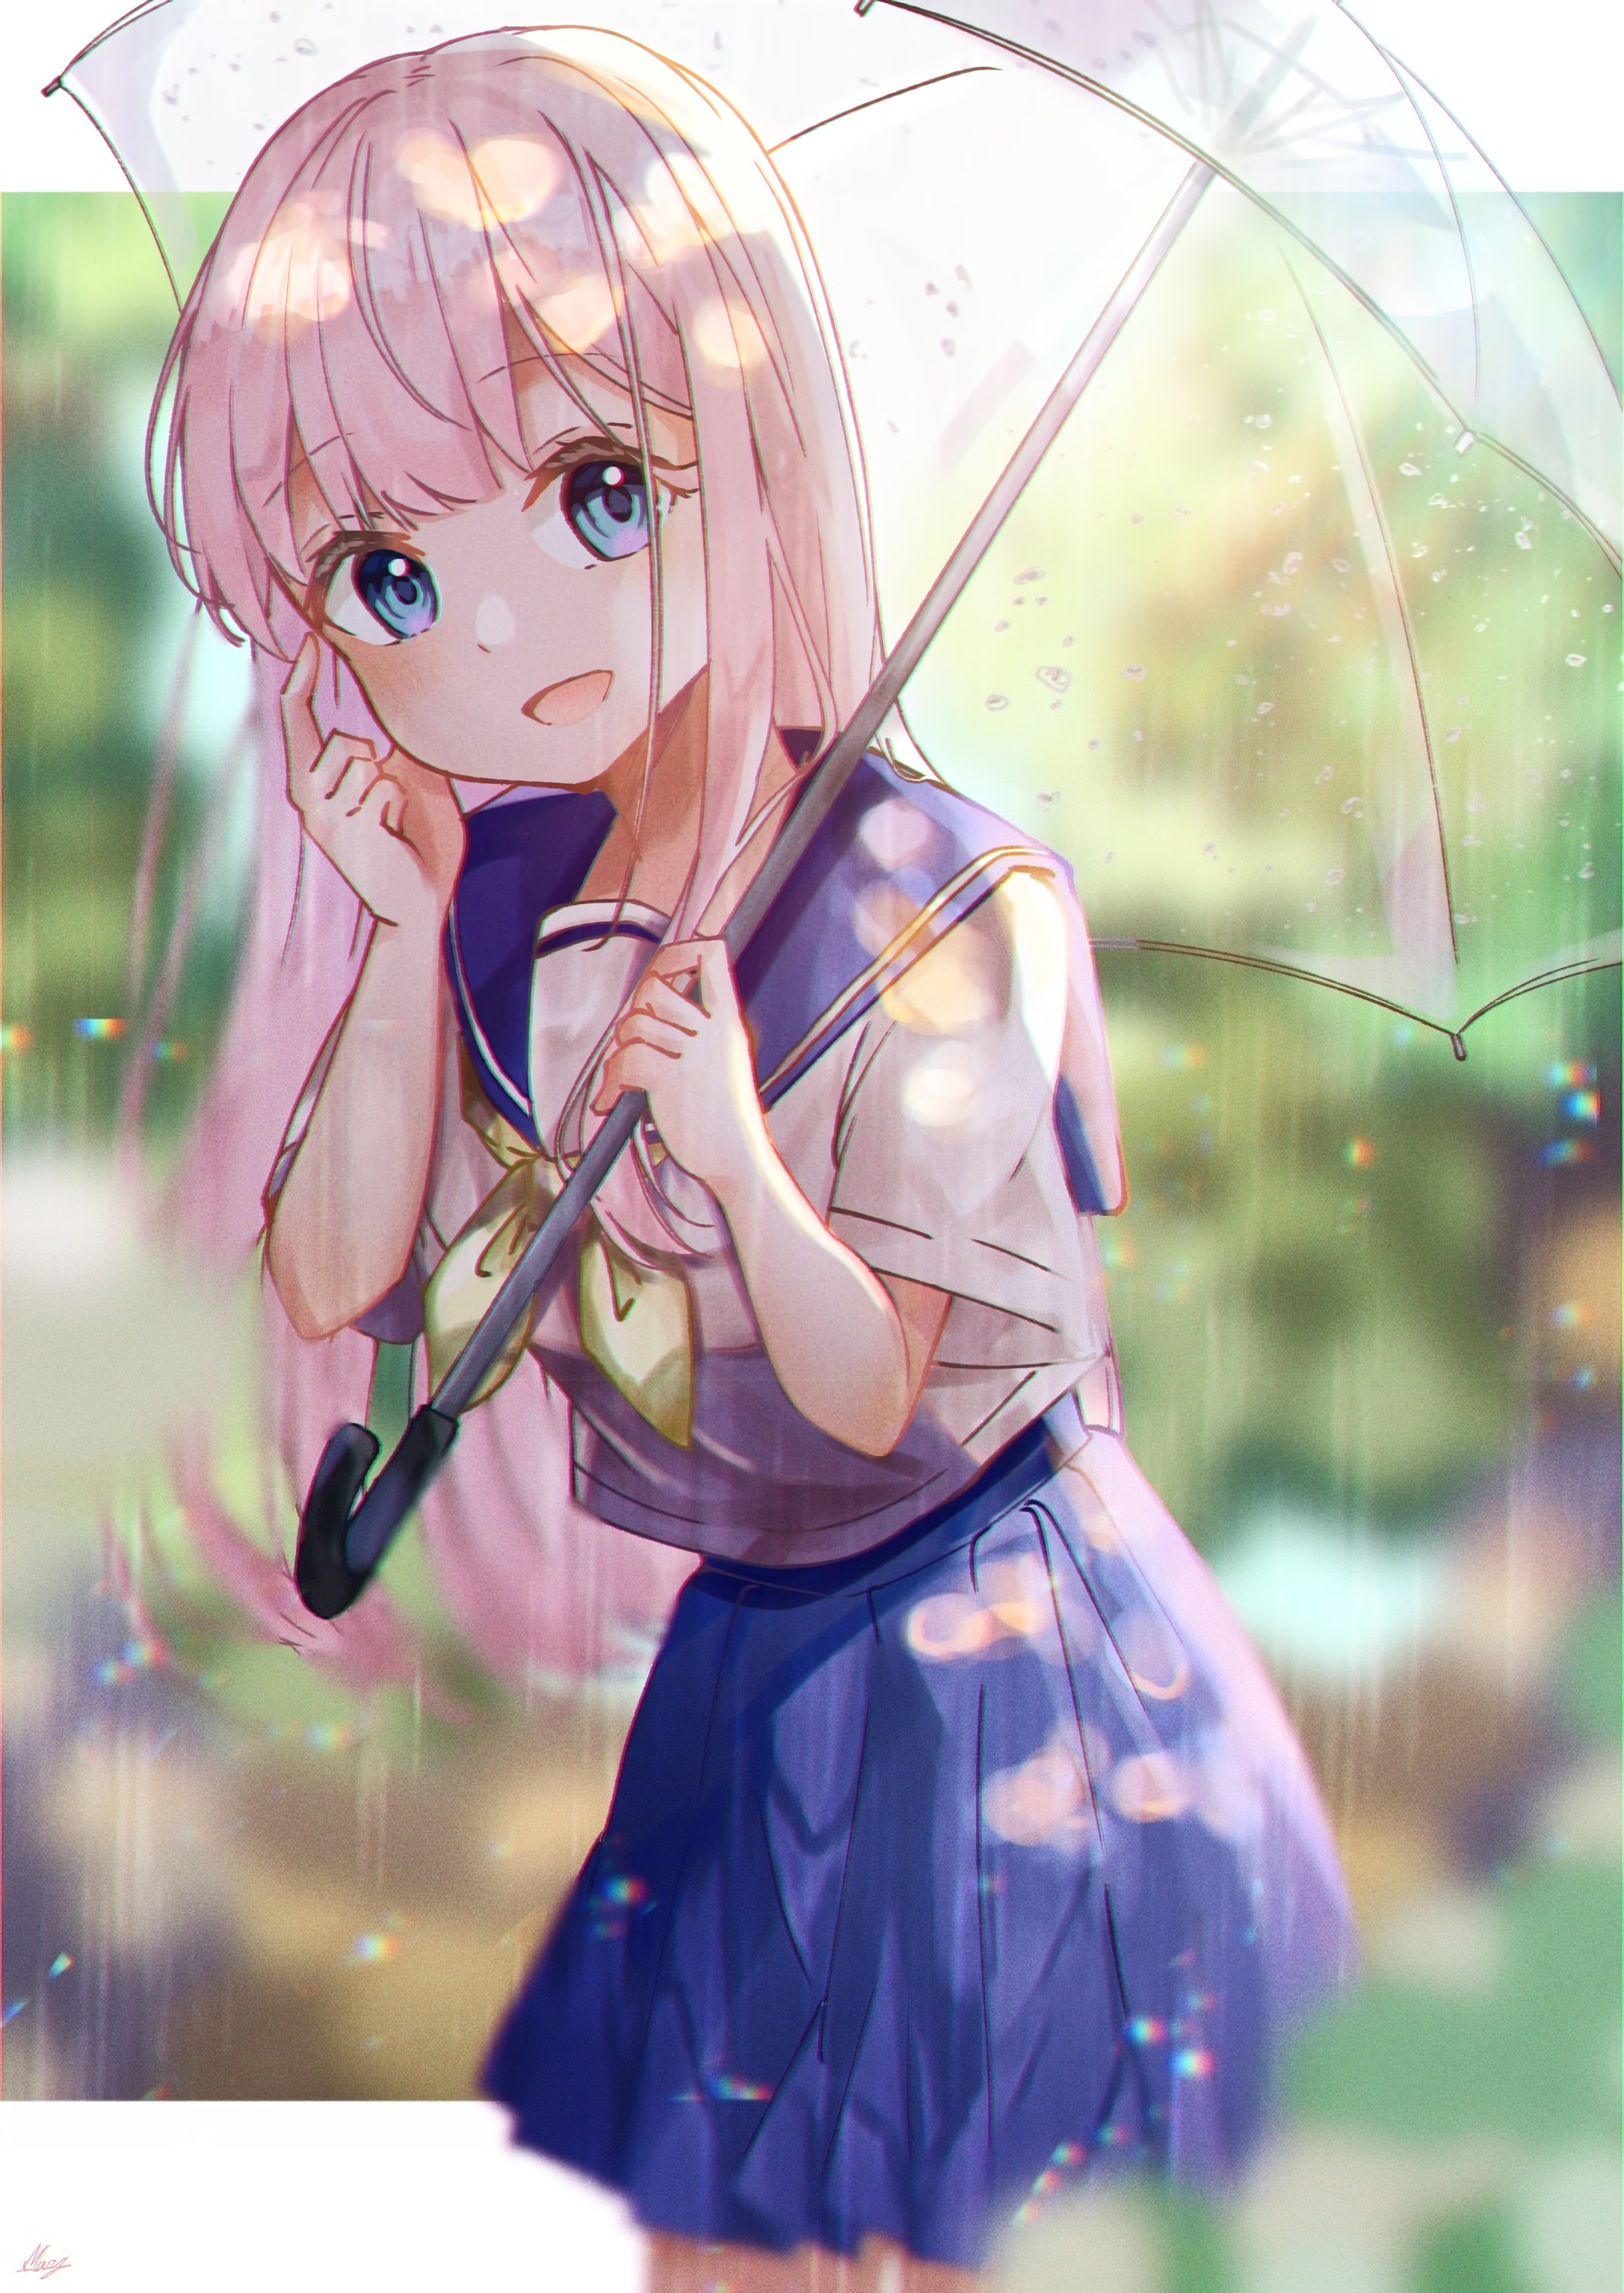 Girl Uniform Umbrella Rain Anime Art